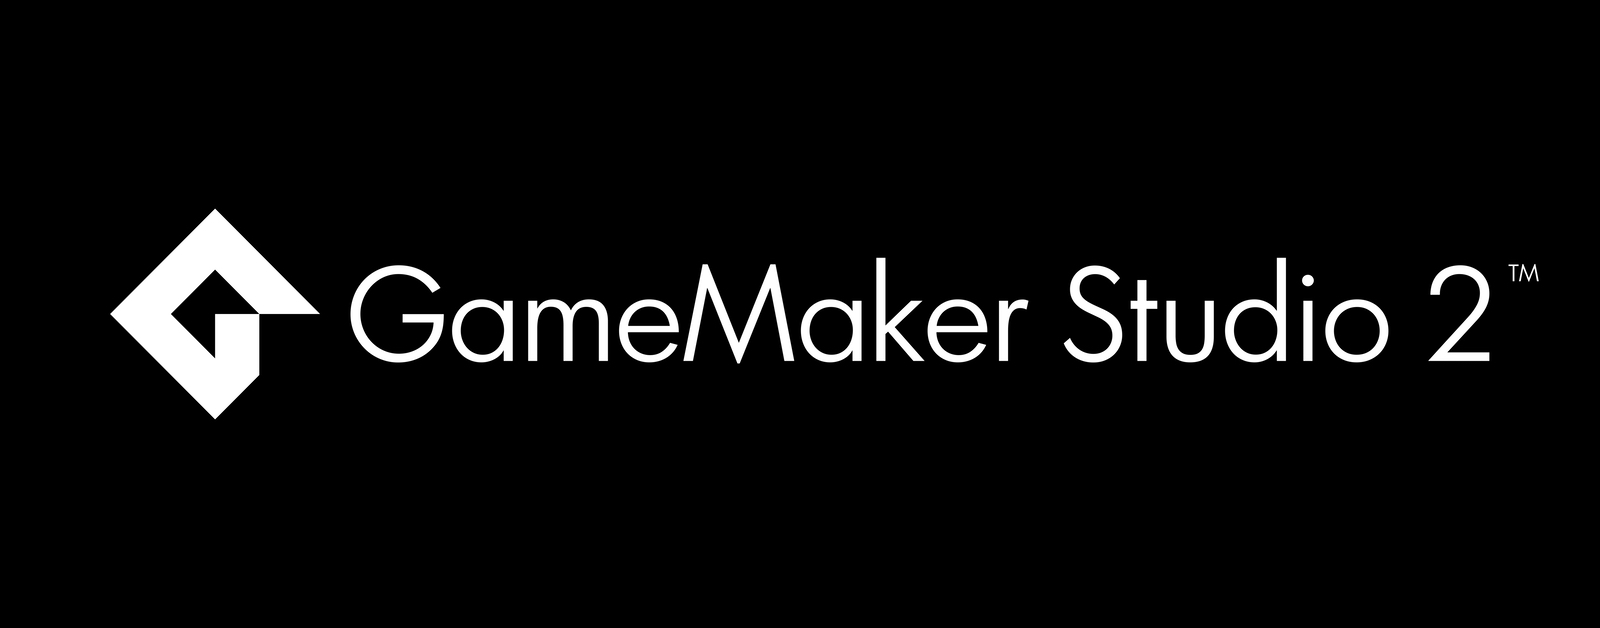 Gamemaker Studio 2 For Mac